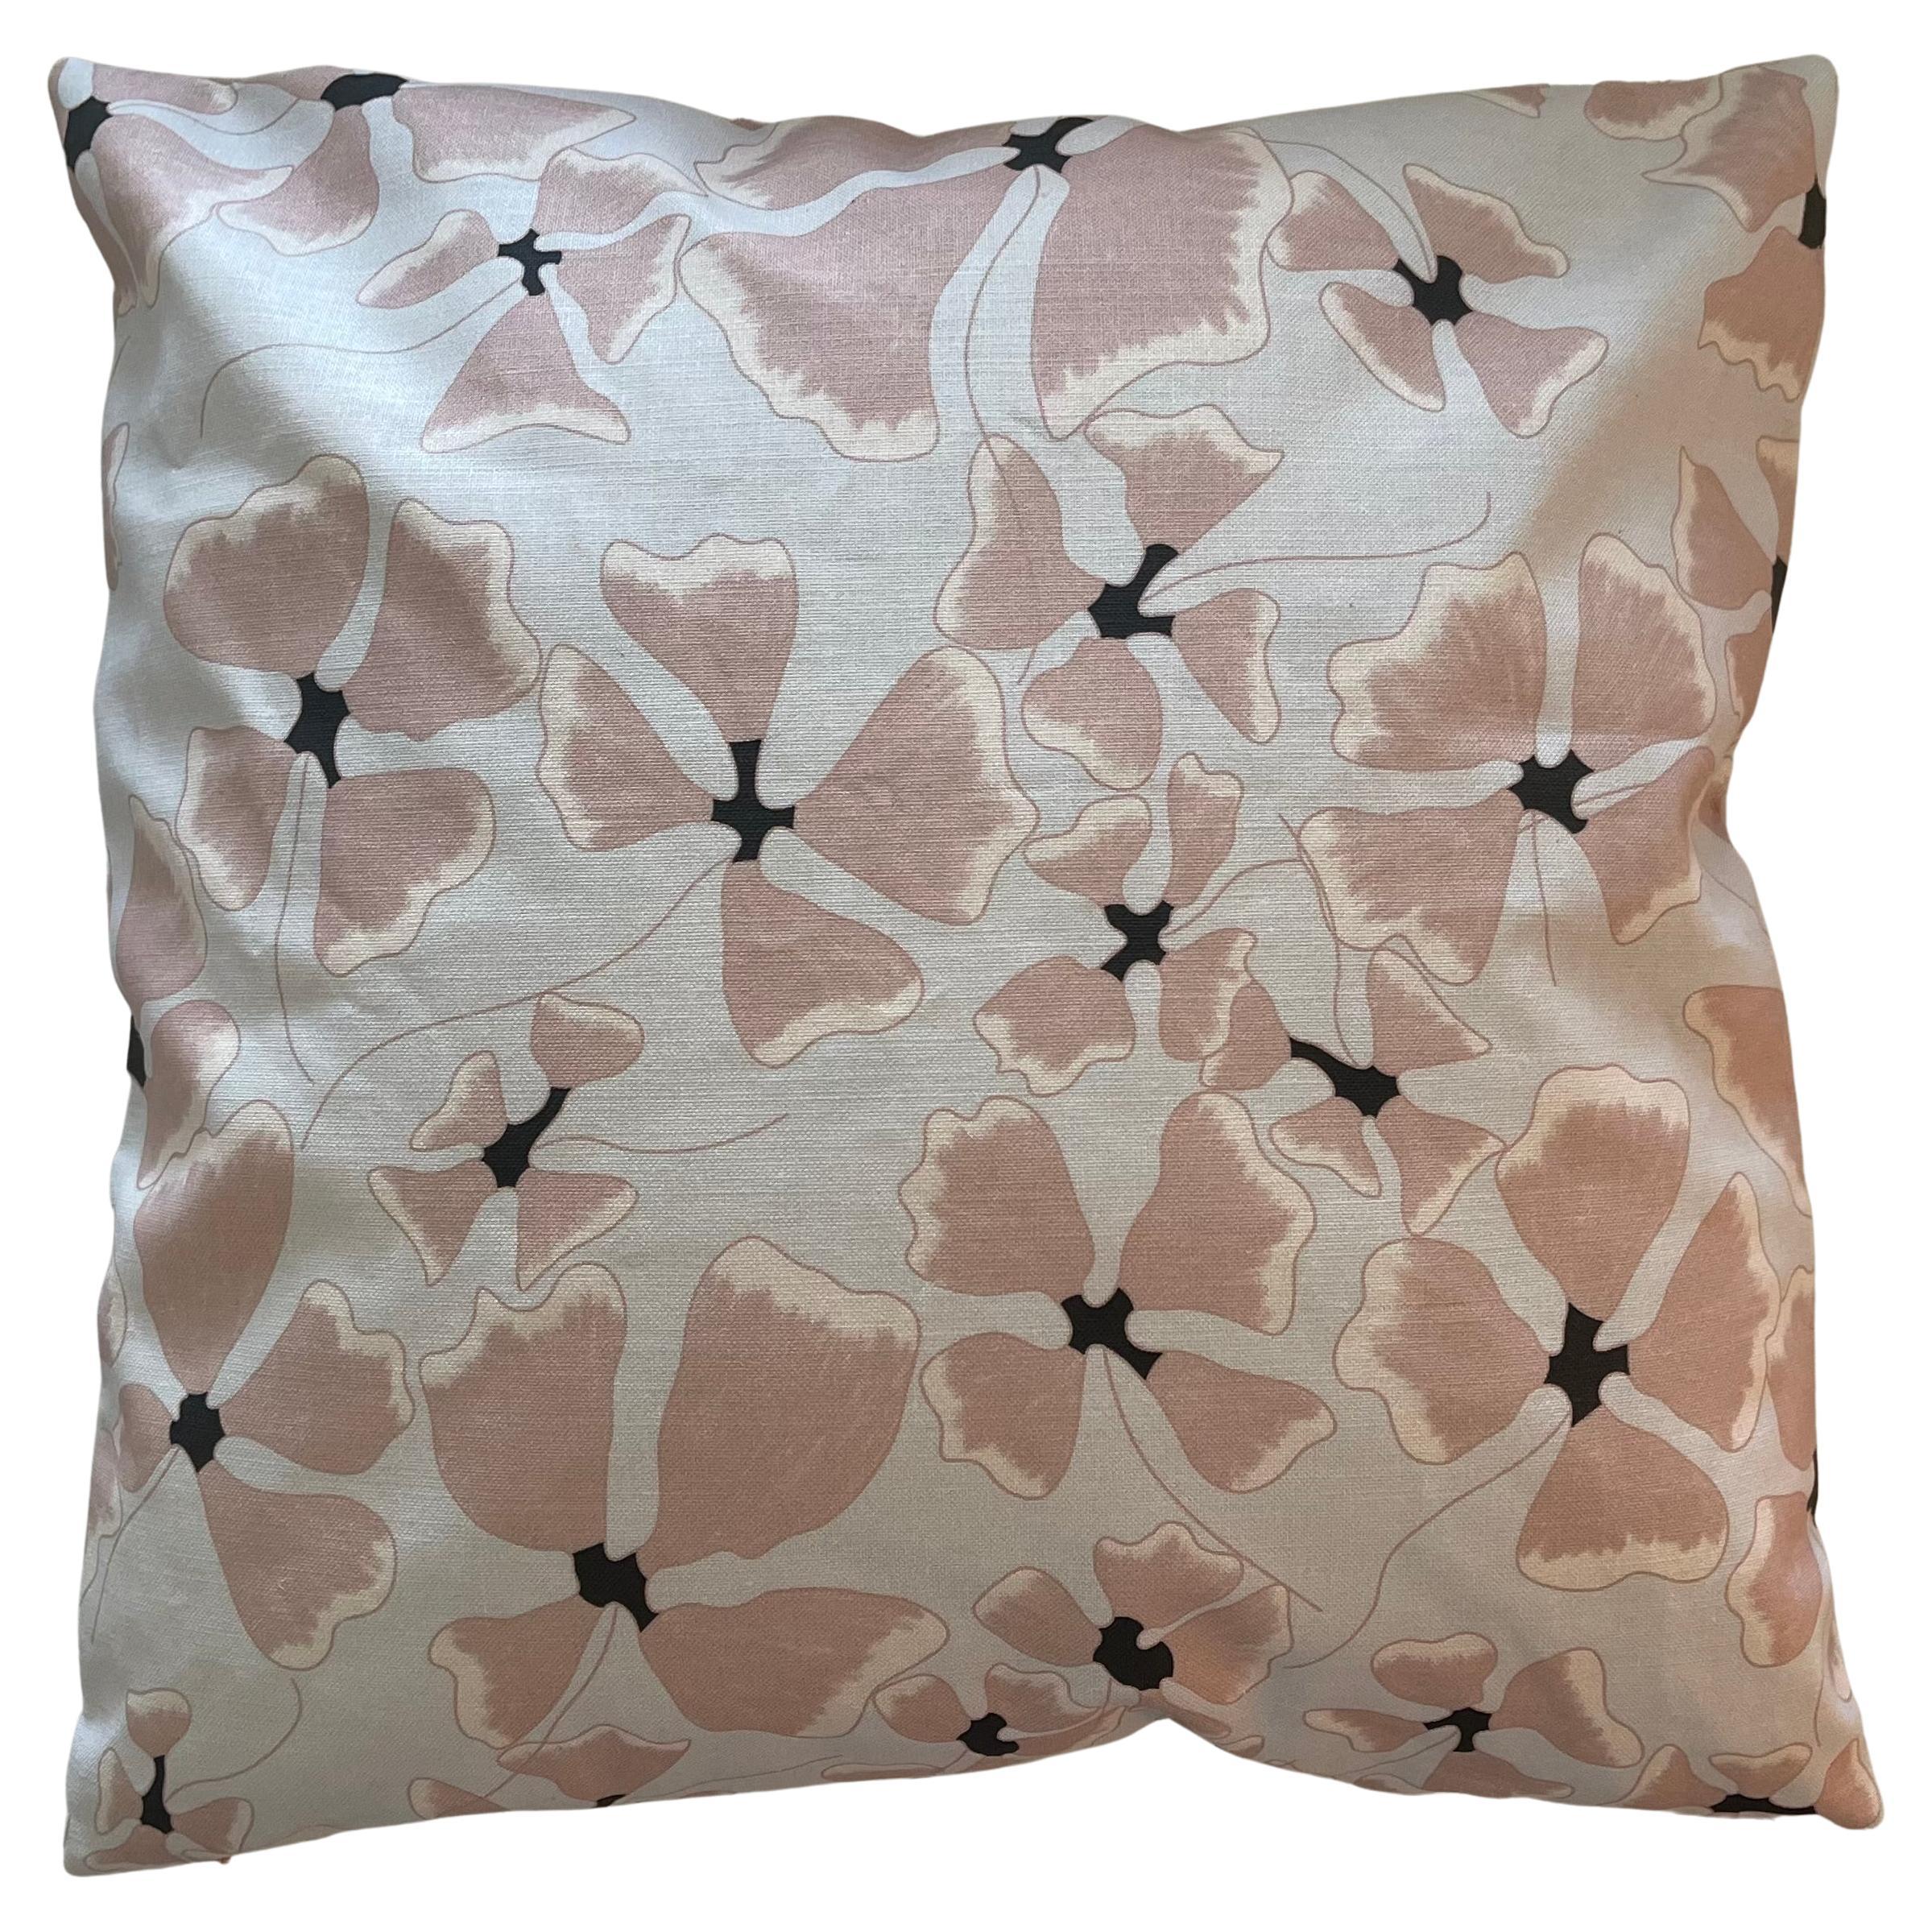 Pair of pillows in Francesca Arctic Blush